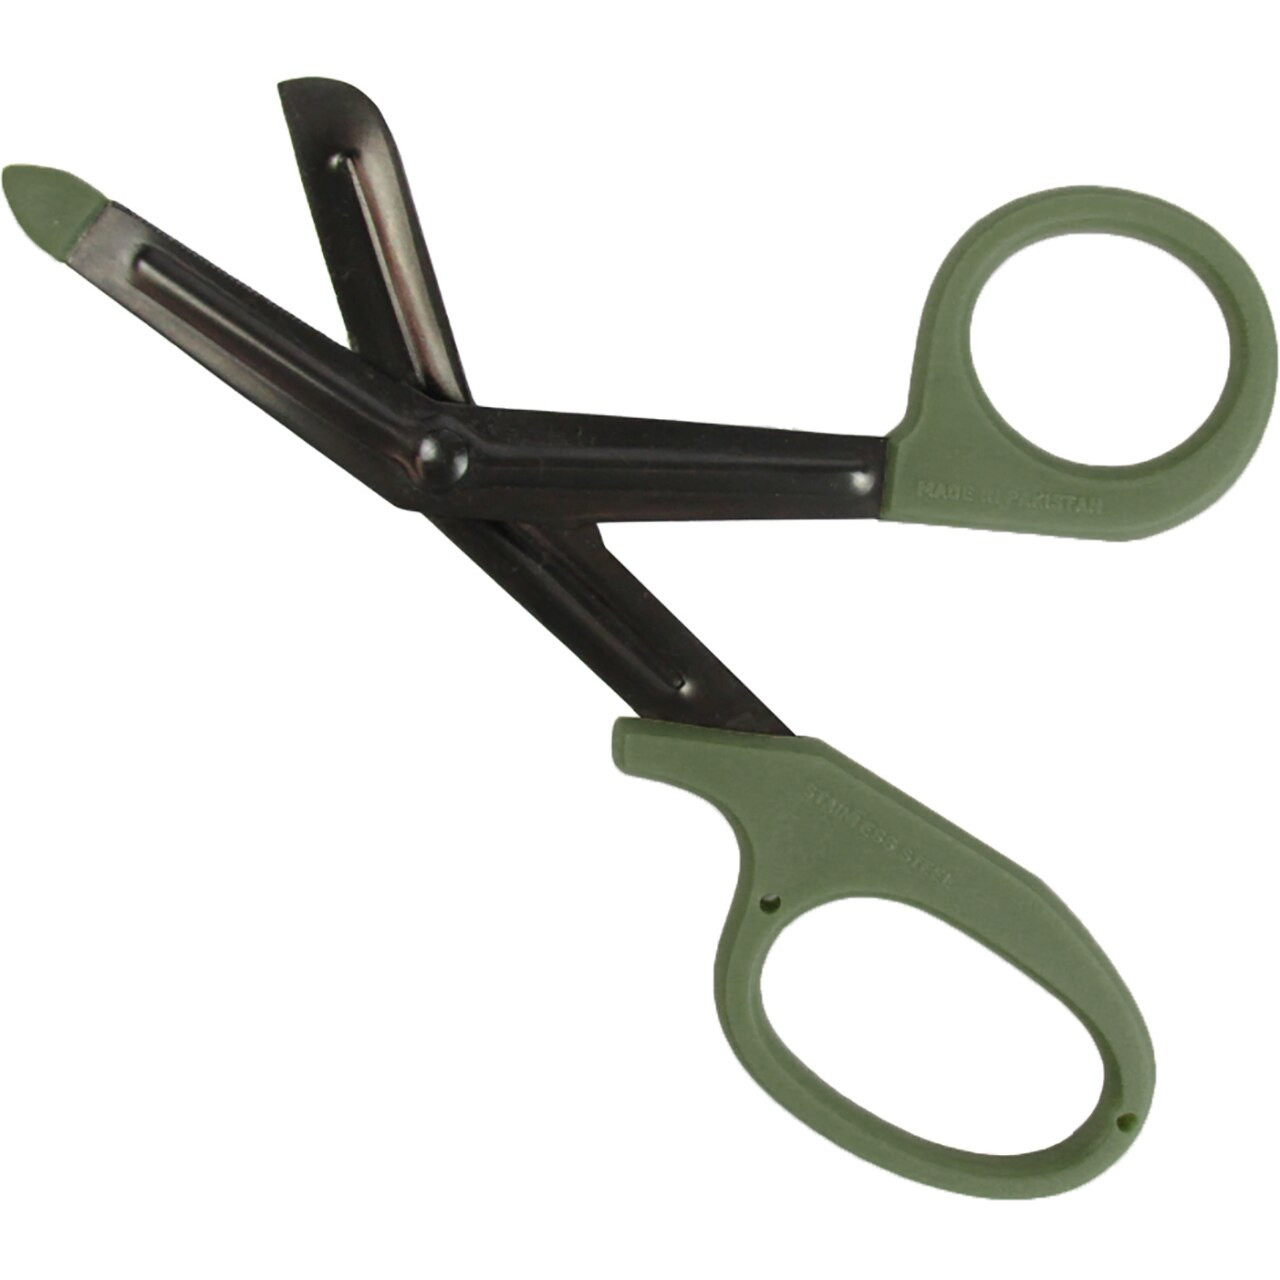 Safety School Scissors - 10 Pack - Versatile, Safe & 135mm